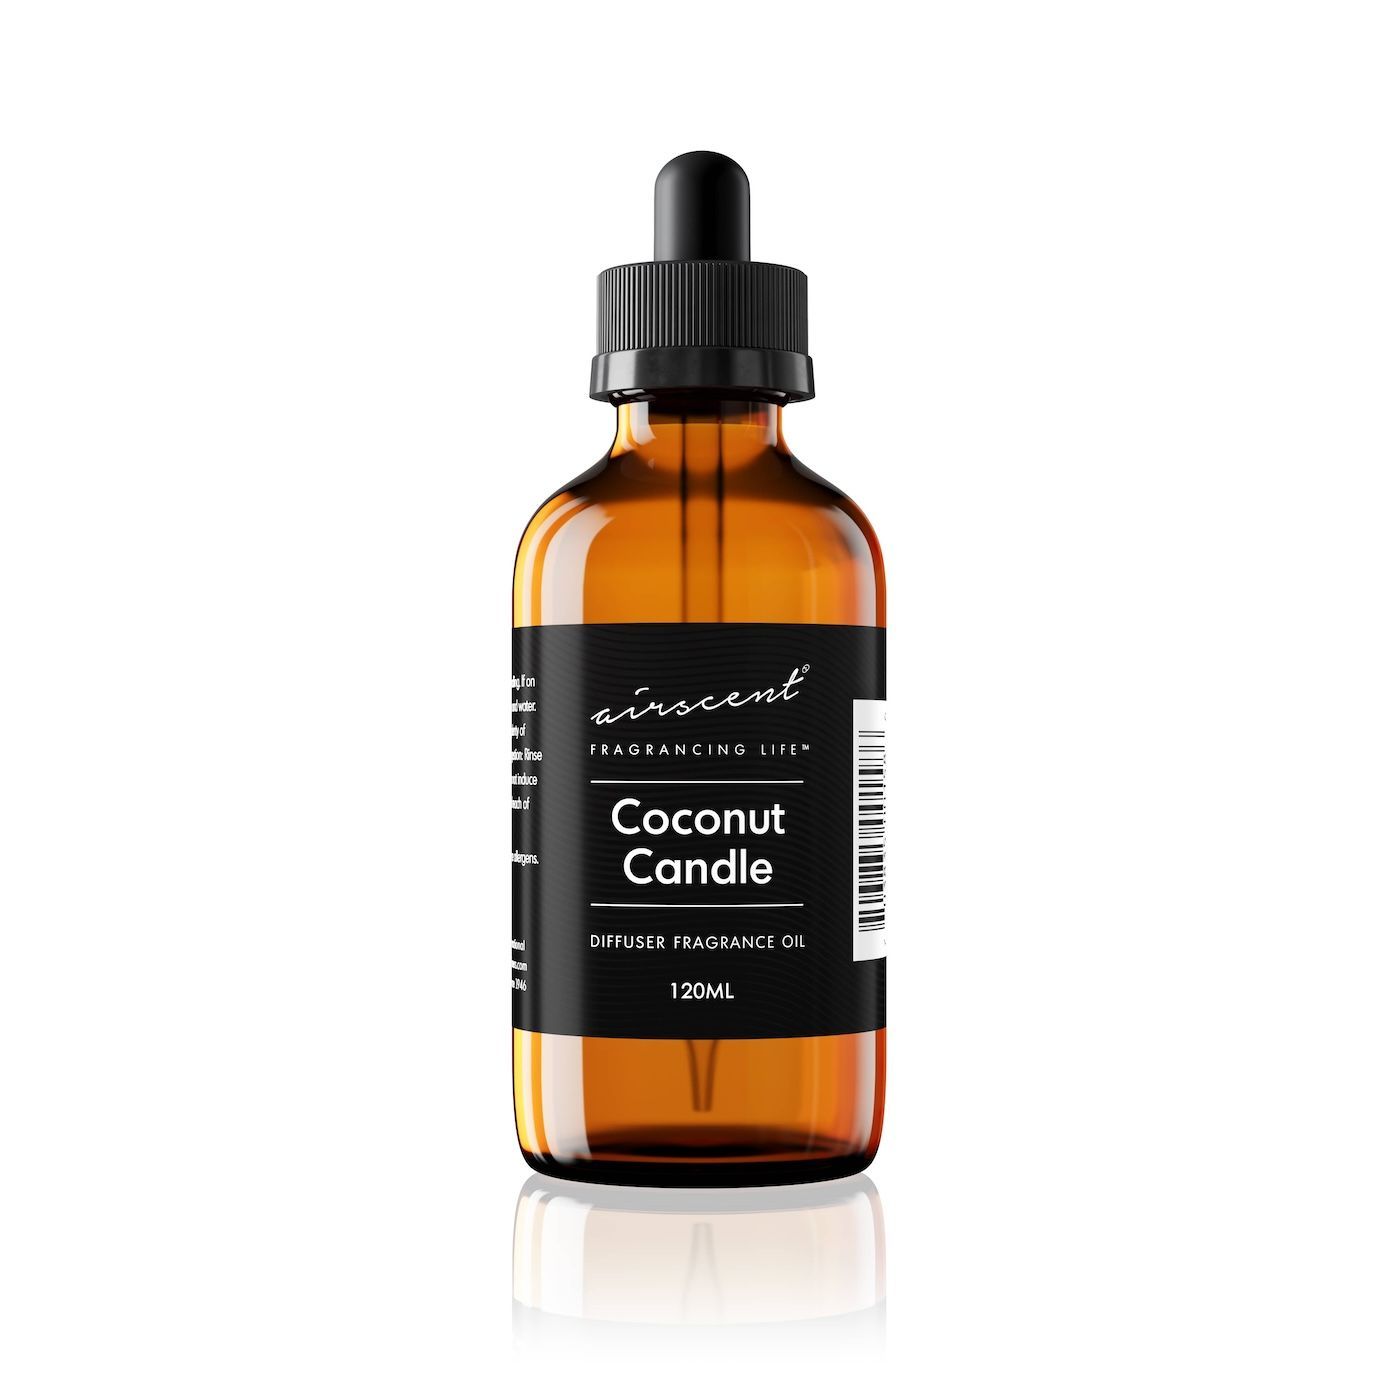 Coconut Candle diffuser oil